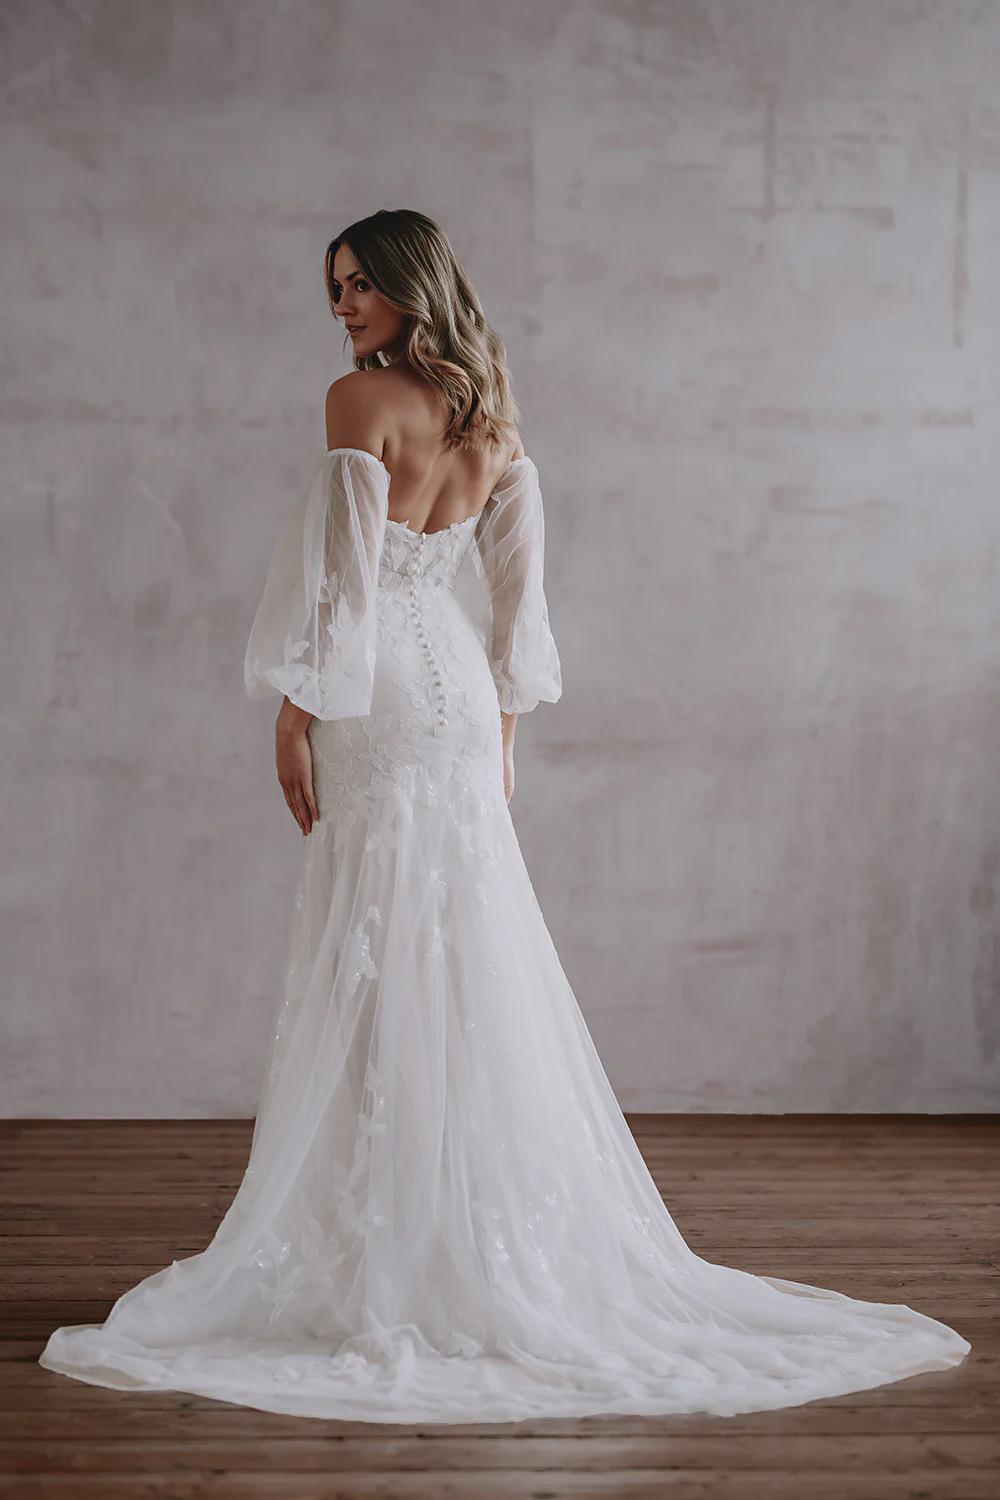 Wedding Gown by Madi Lane